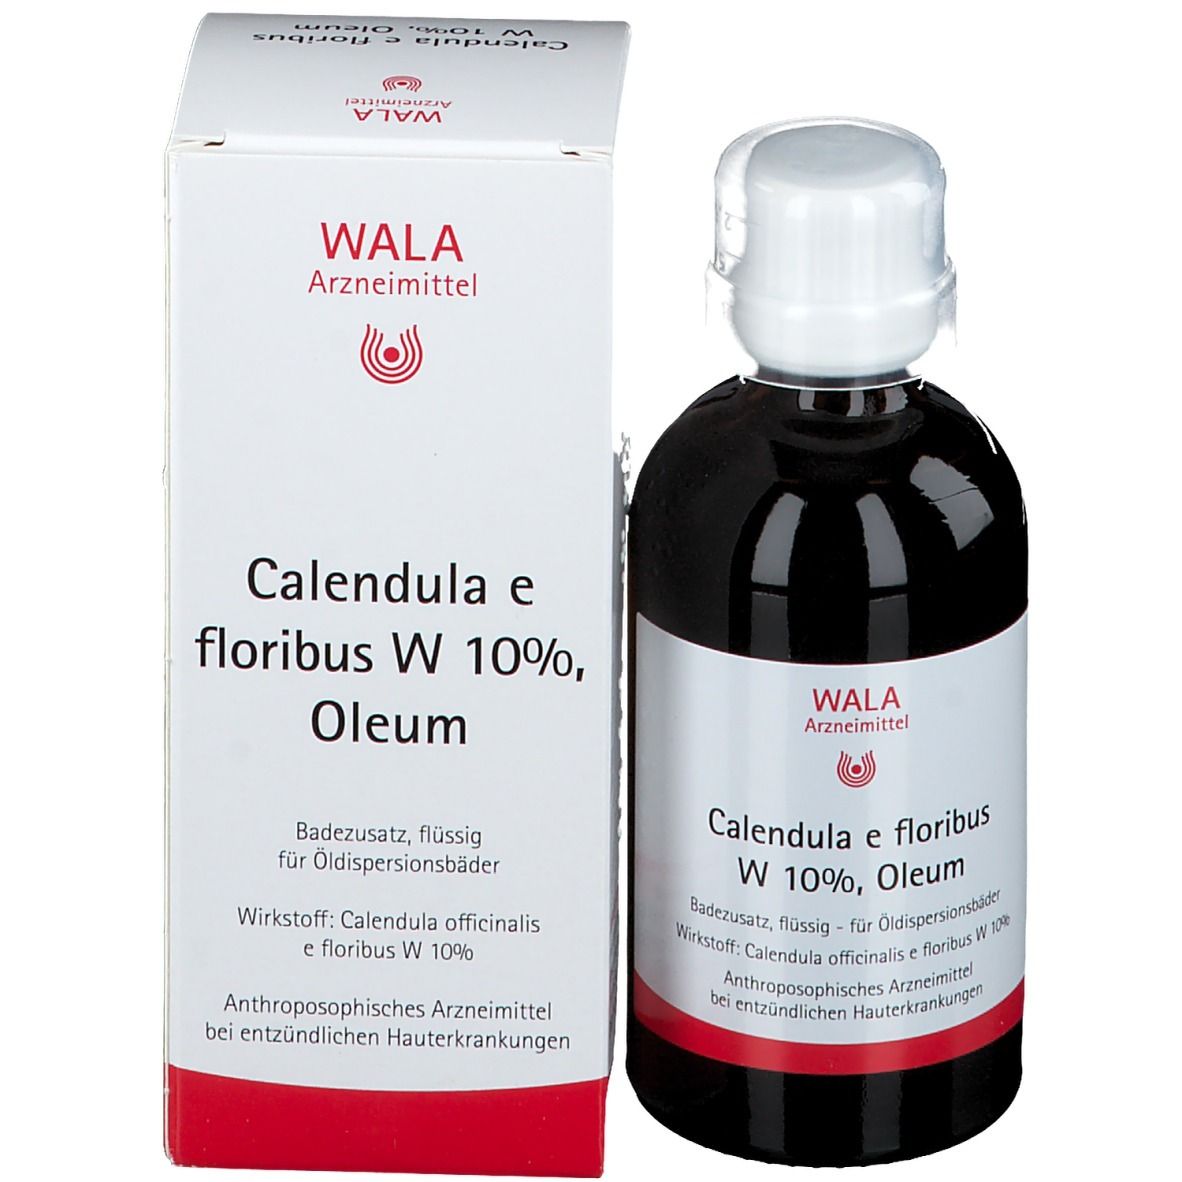 WALA® Calendula e Floribus W 10% Oleum